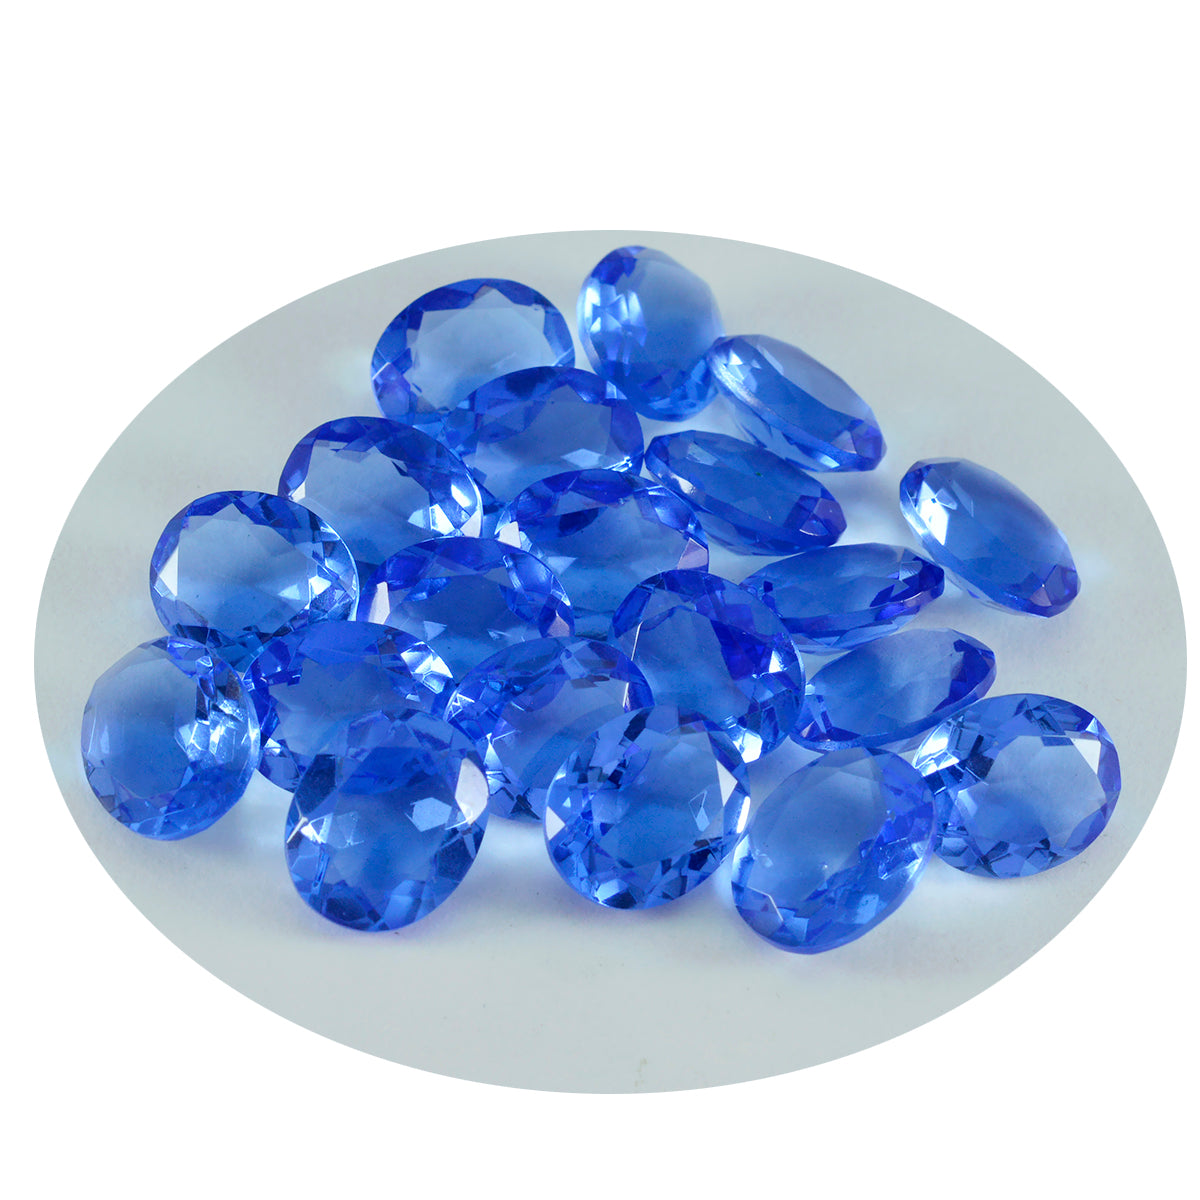 Riyogems 1PC Blue Sapphire CZ Faceted 6x8 mm Oval Shape A+1 Quality Gem